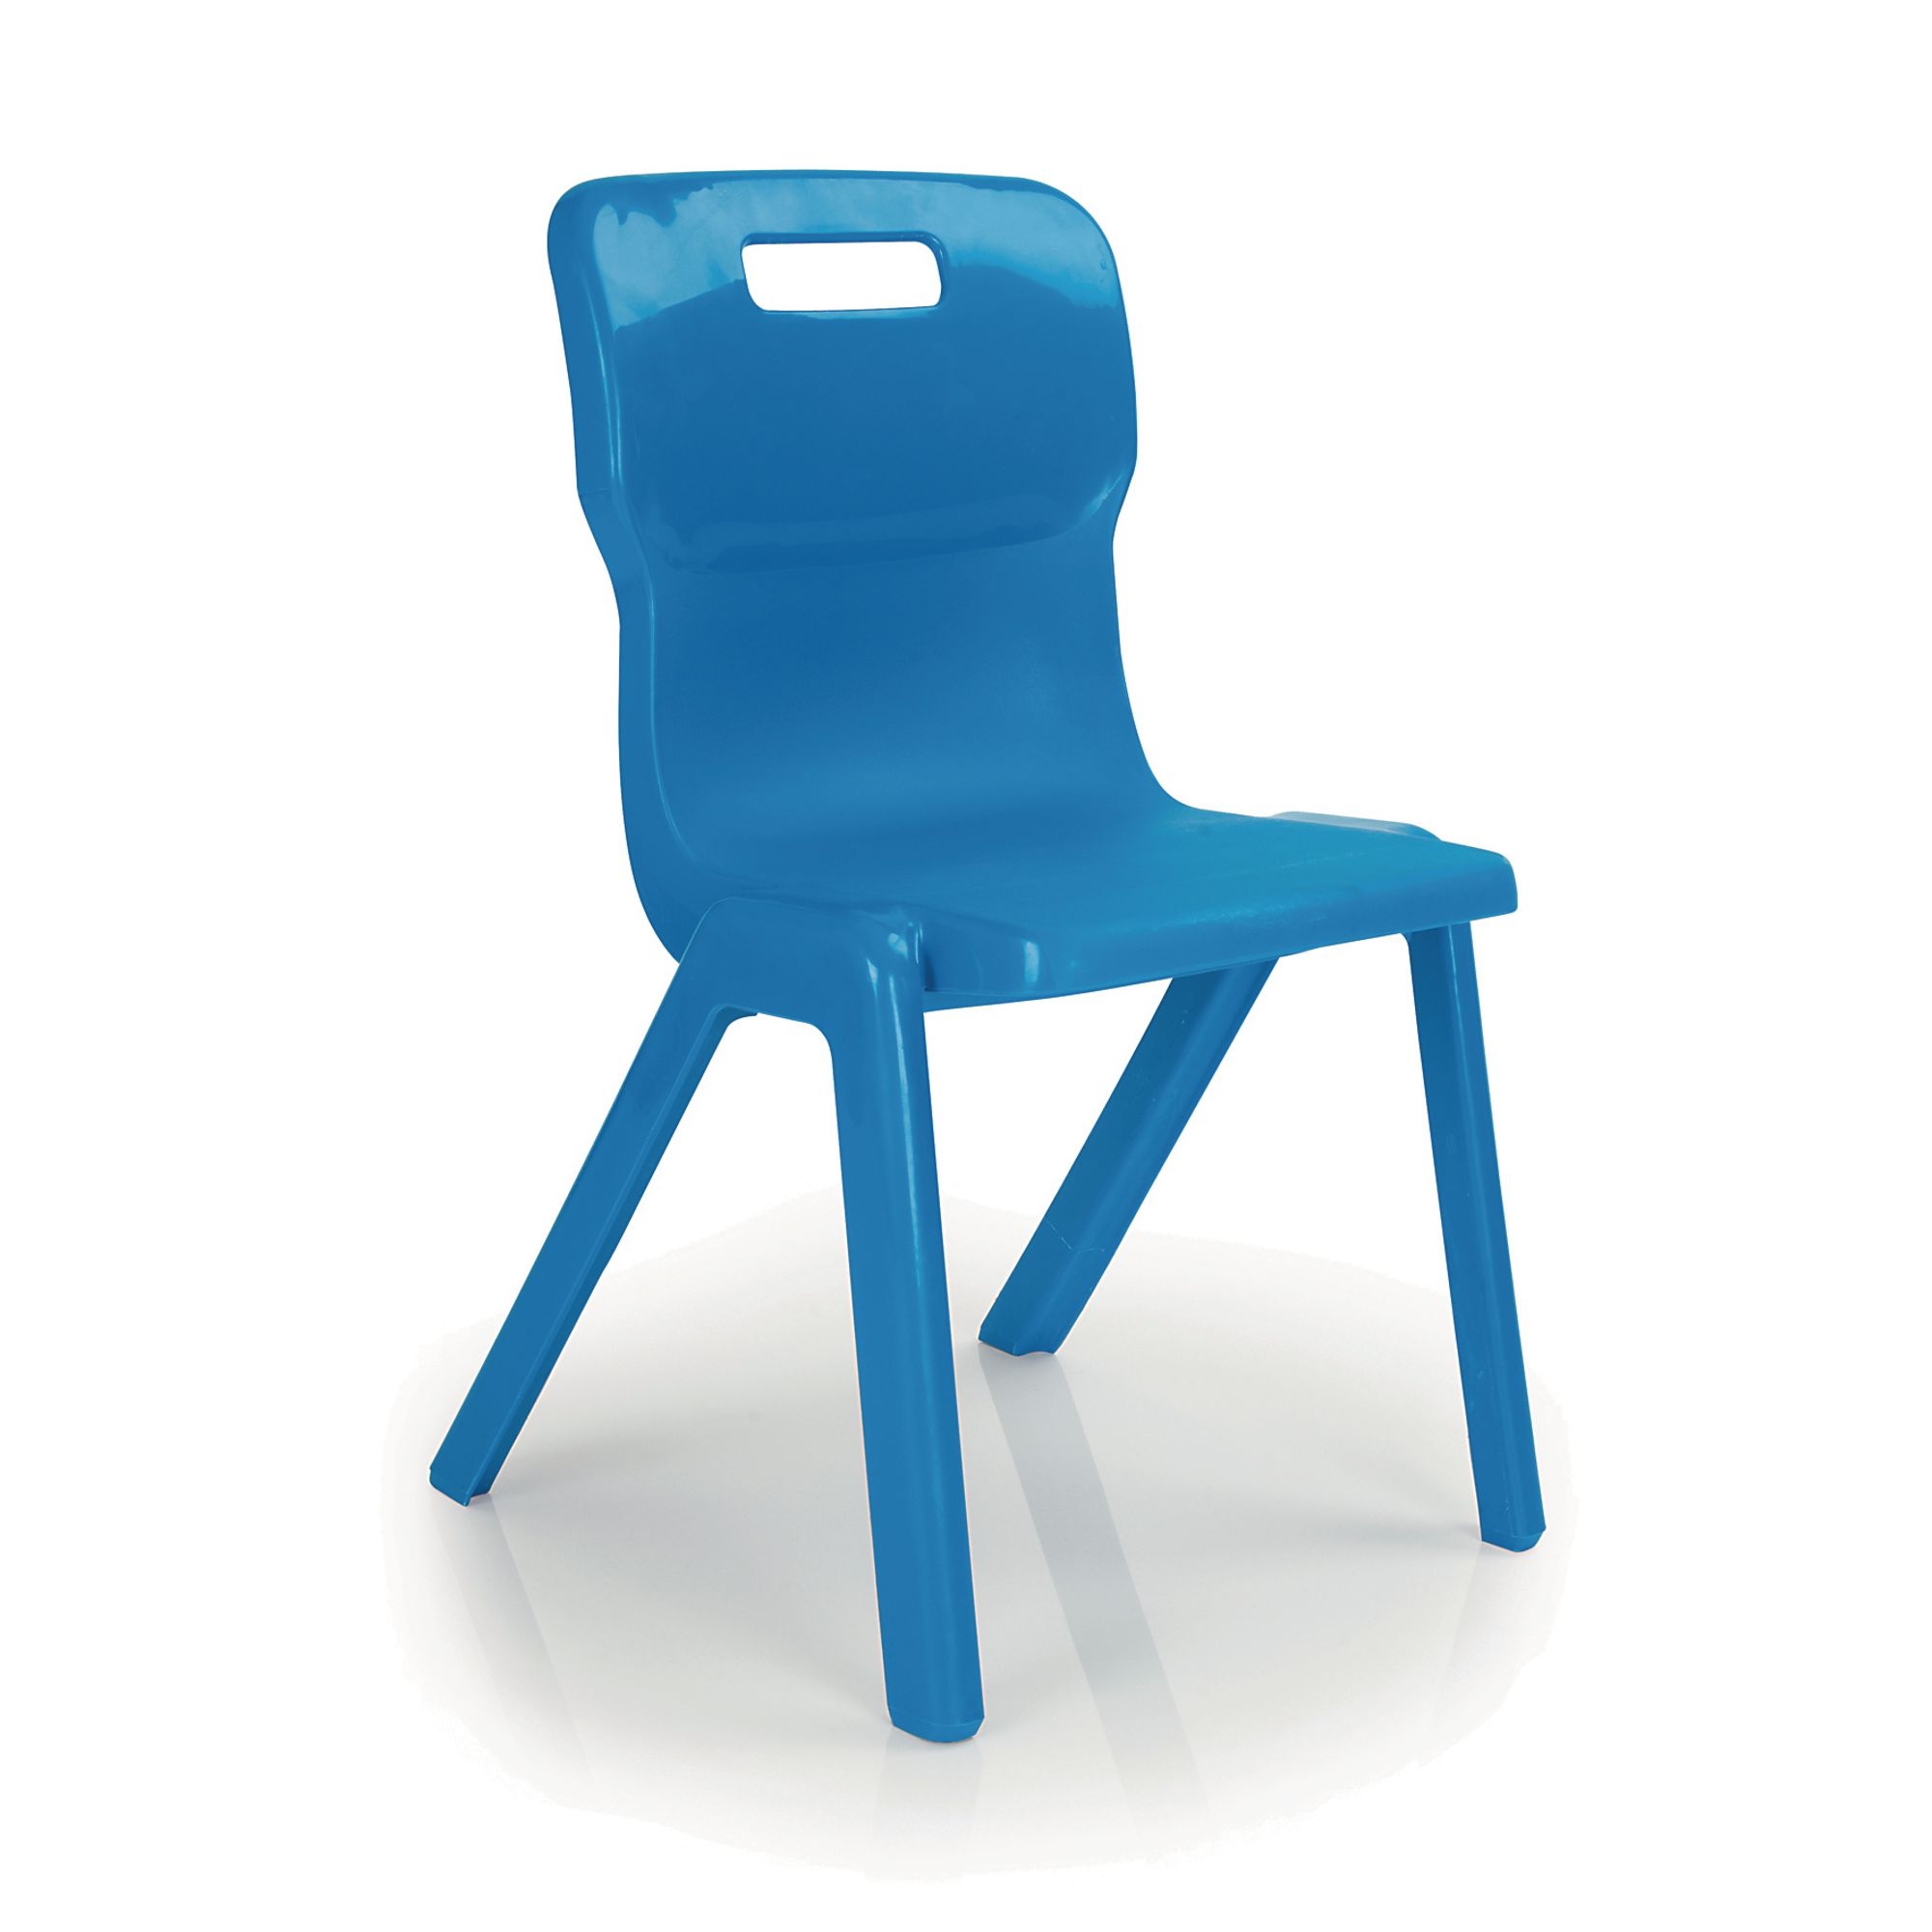 One Piece Titan Chair - Size 1 Ages 3-4 Blue